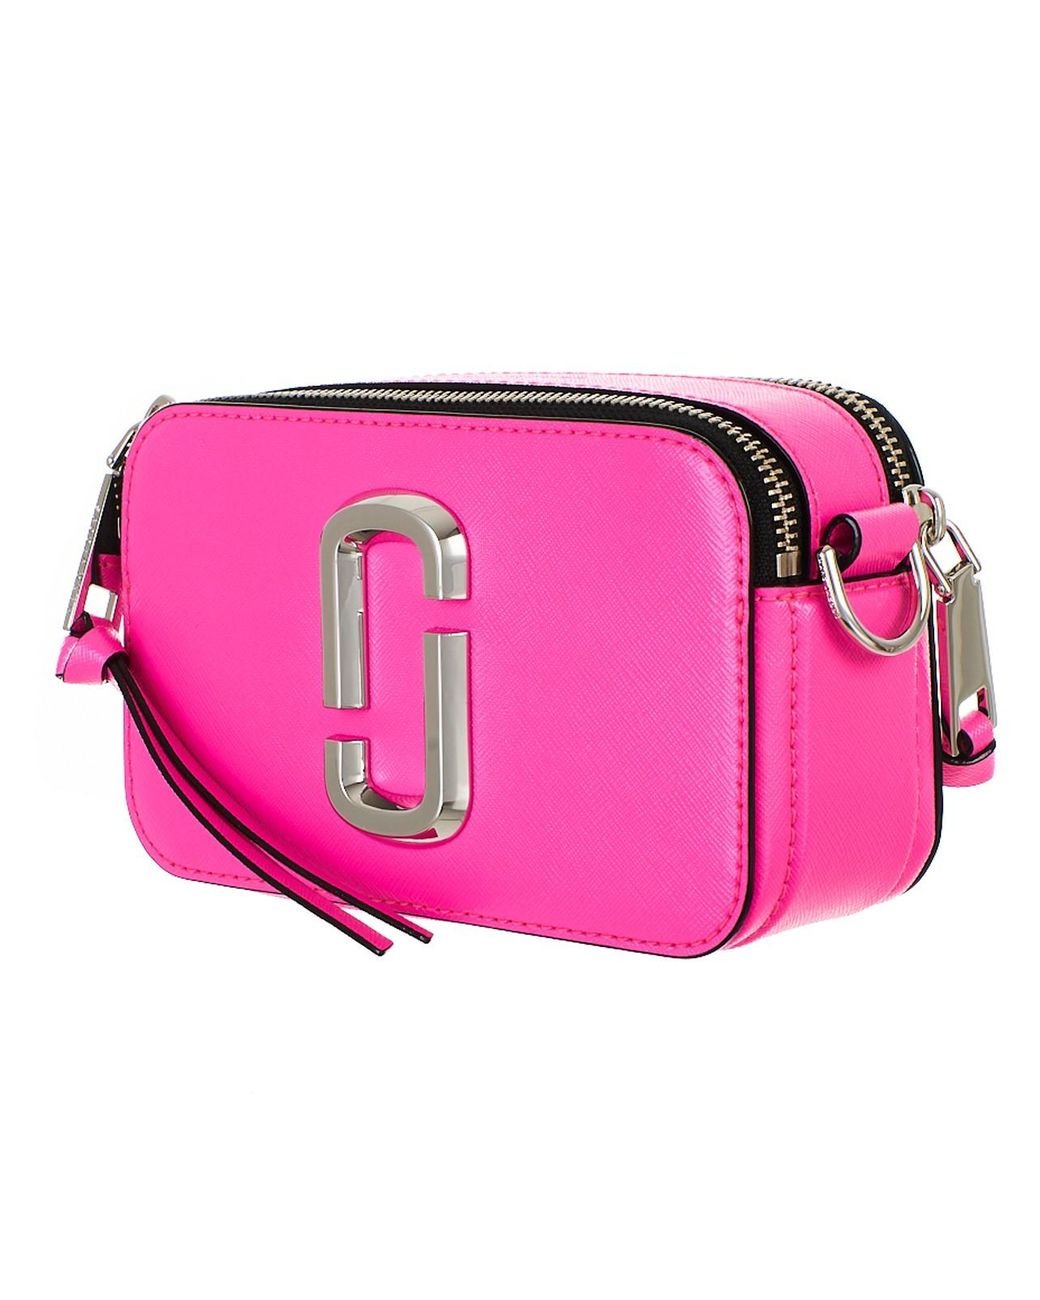 Genuine Marc Jacobs Snapshot Small Camera Bag Crossbody hot pink sales